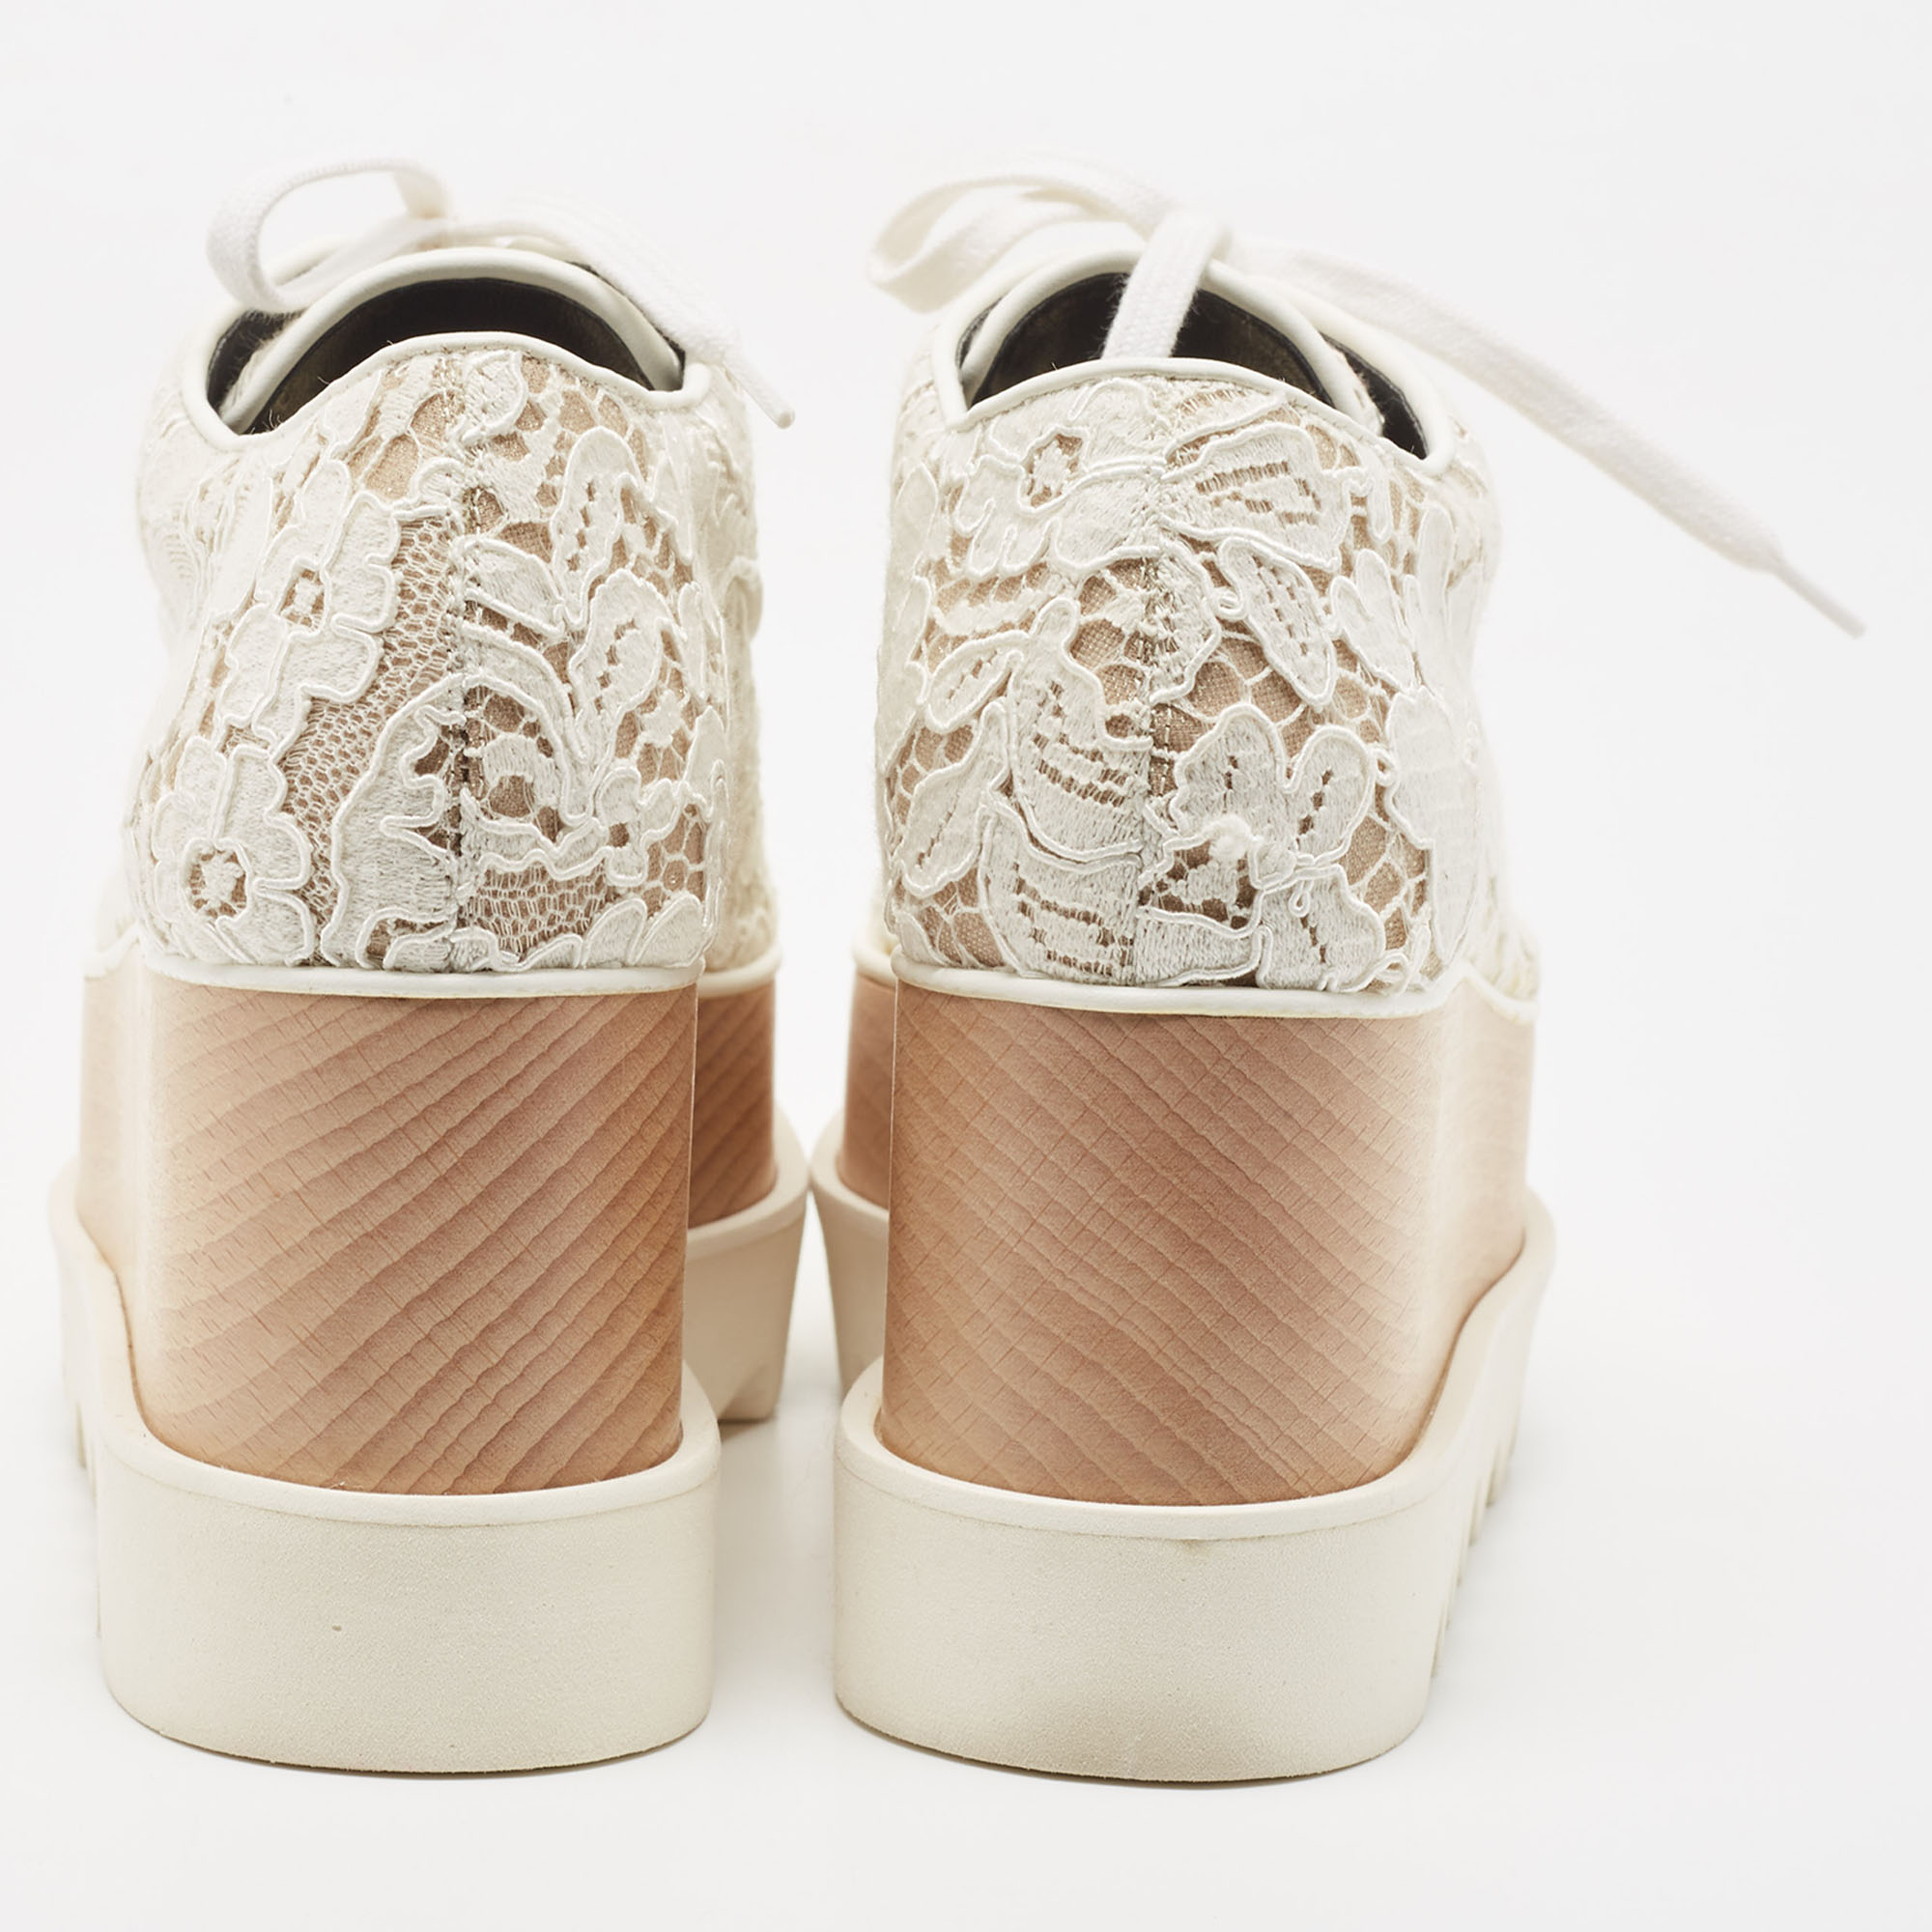 Stella McCartney White Lace Elyse Platform Lace Up Sneakers Size 36